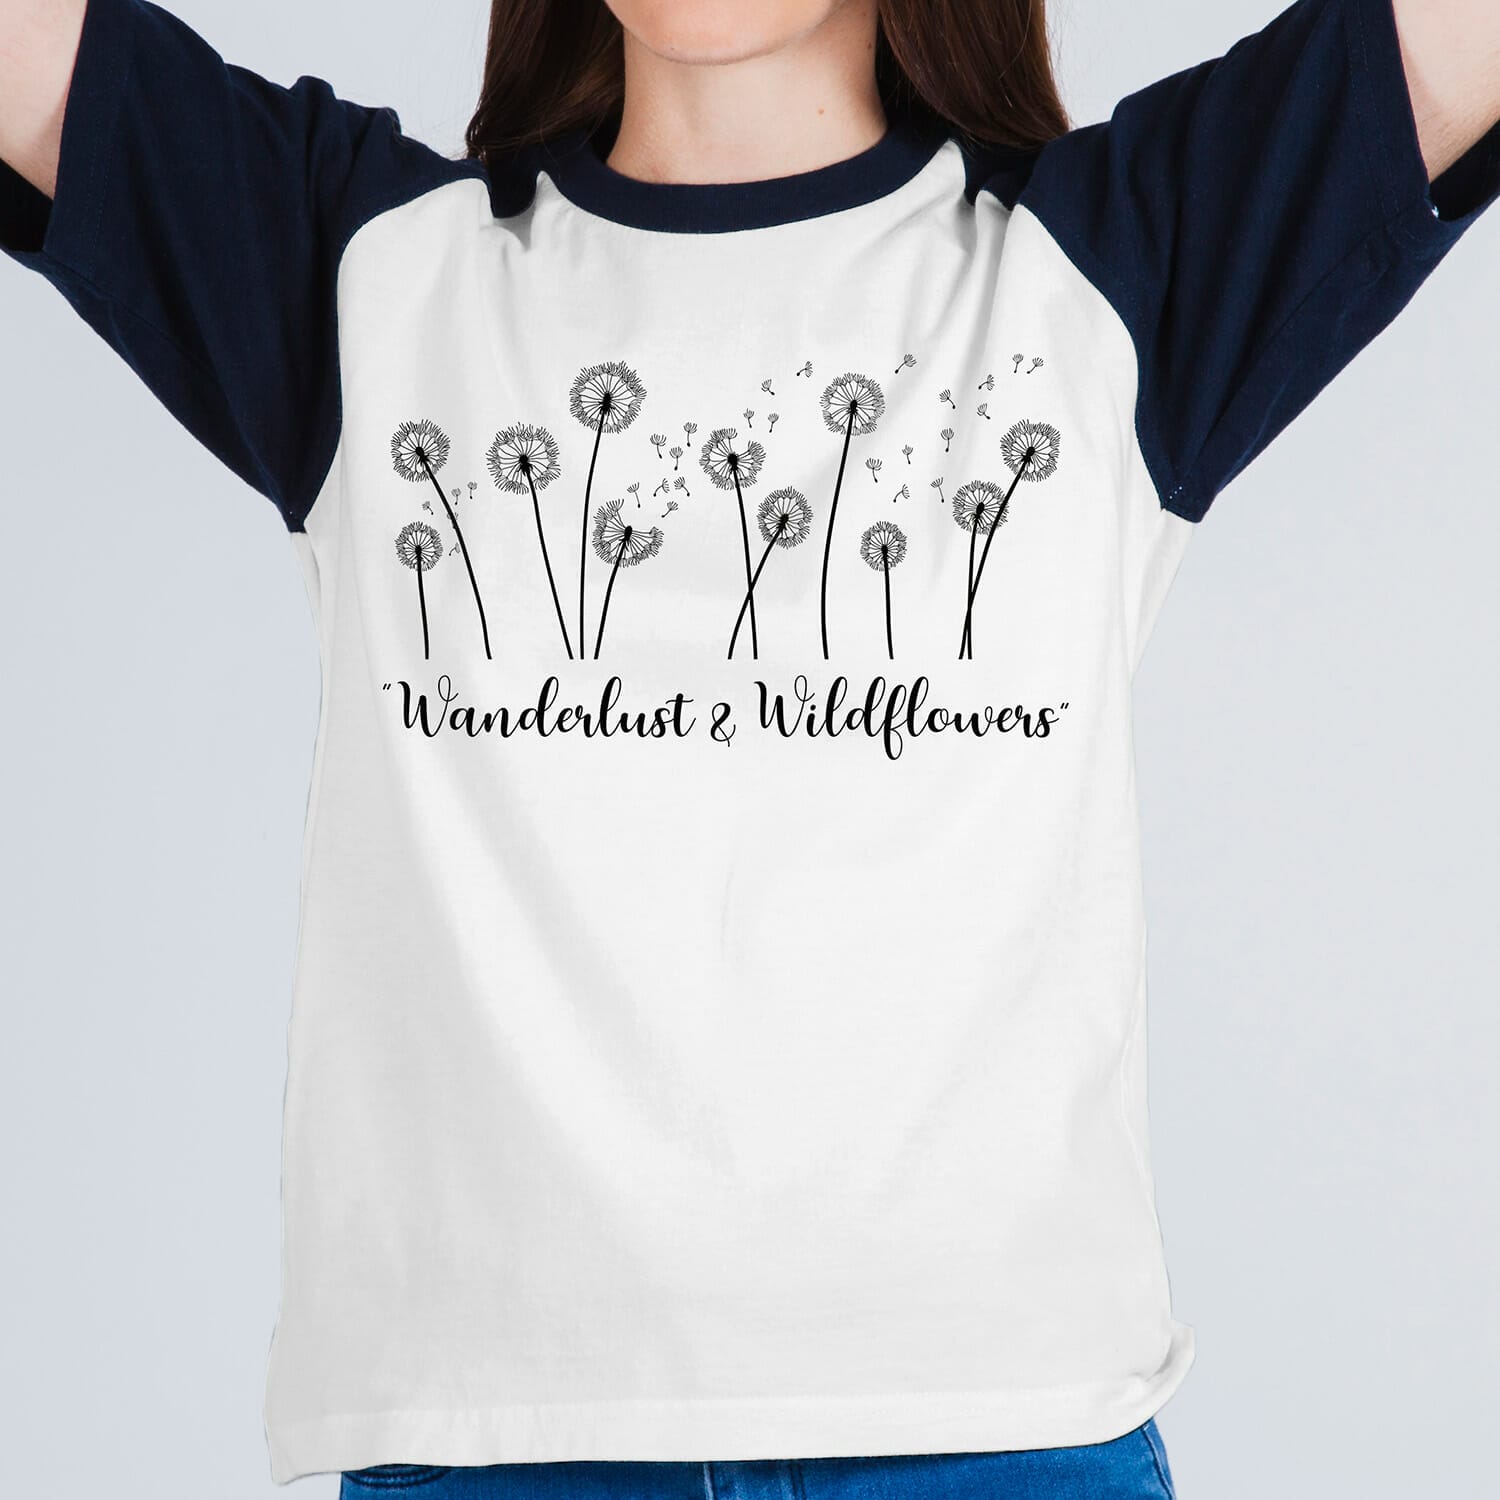 Wonder lust and wind flowers T-shirt design